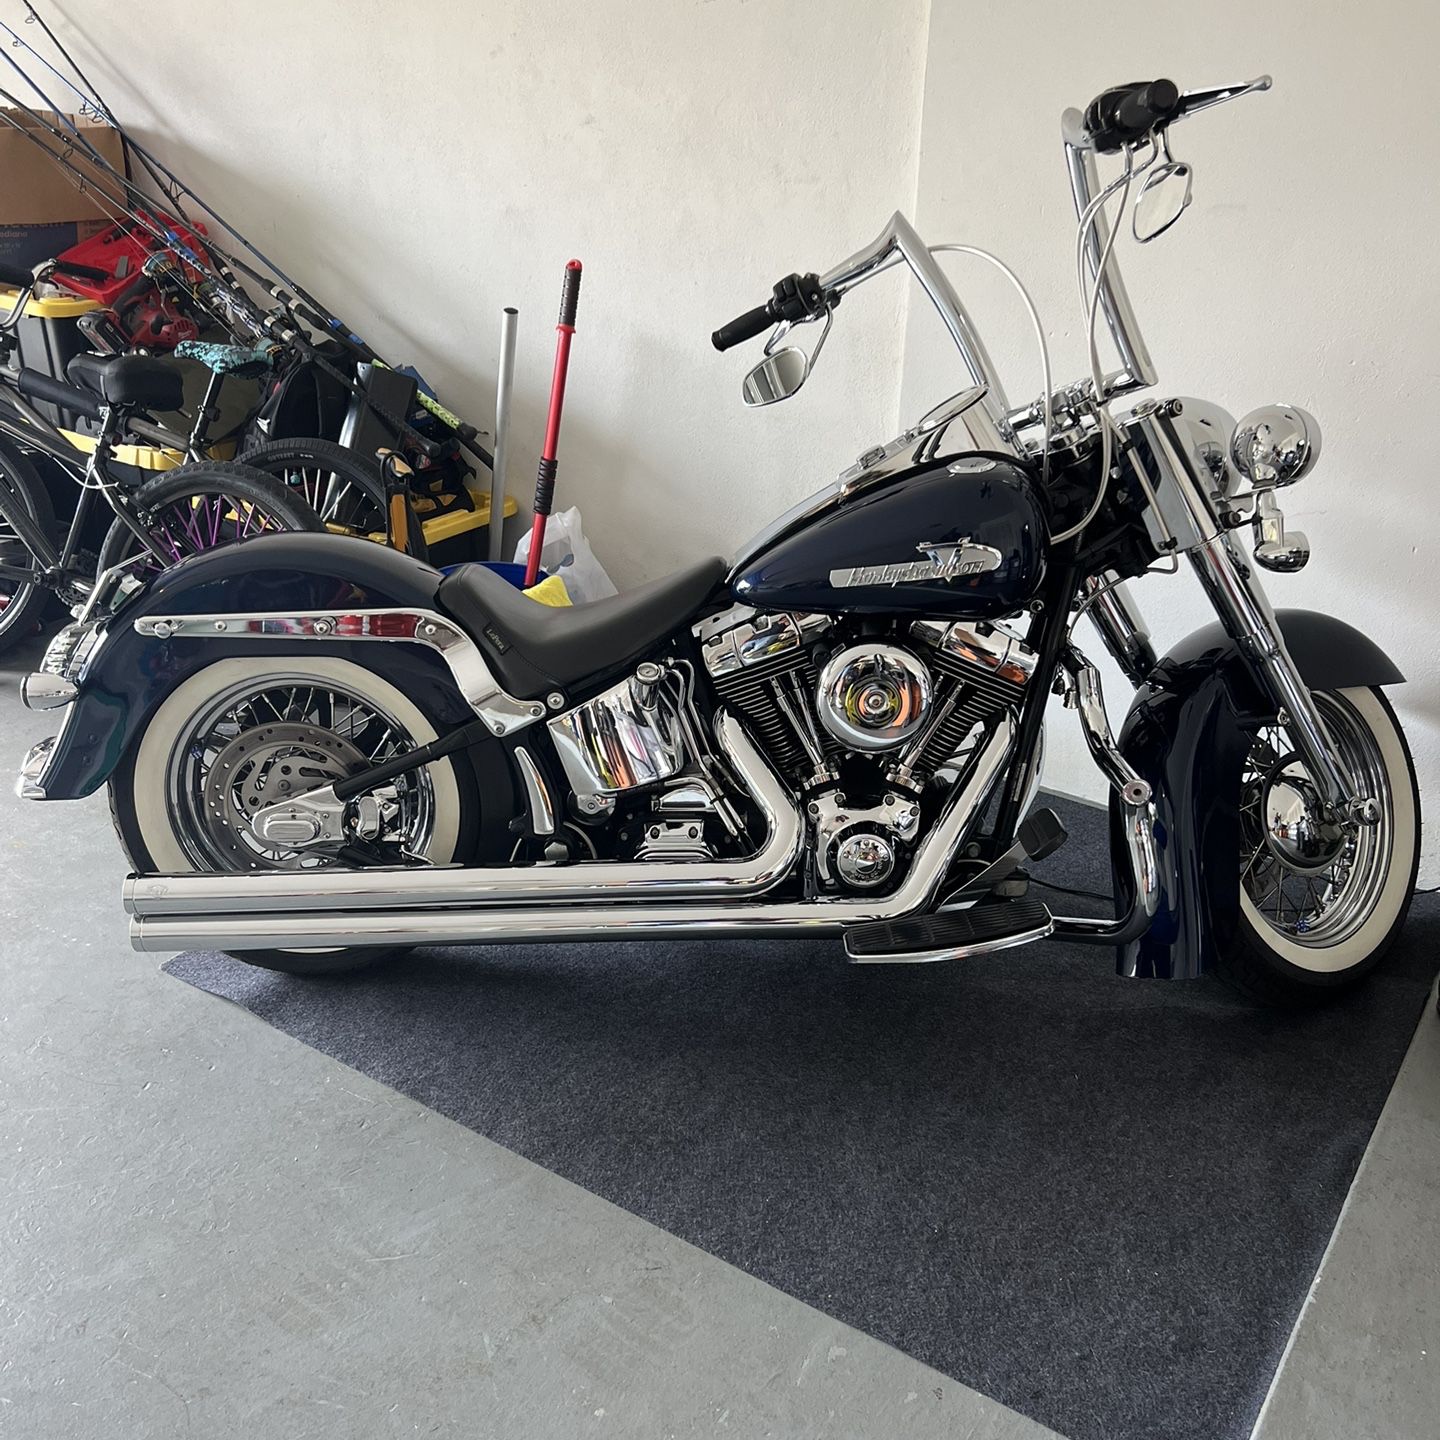 2004 Harley Davidson Heritage